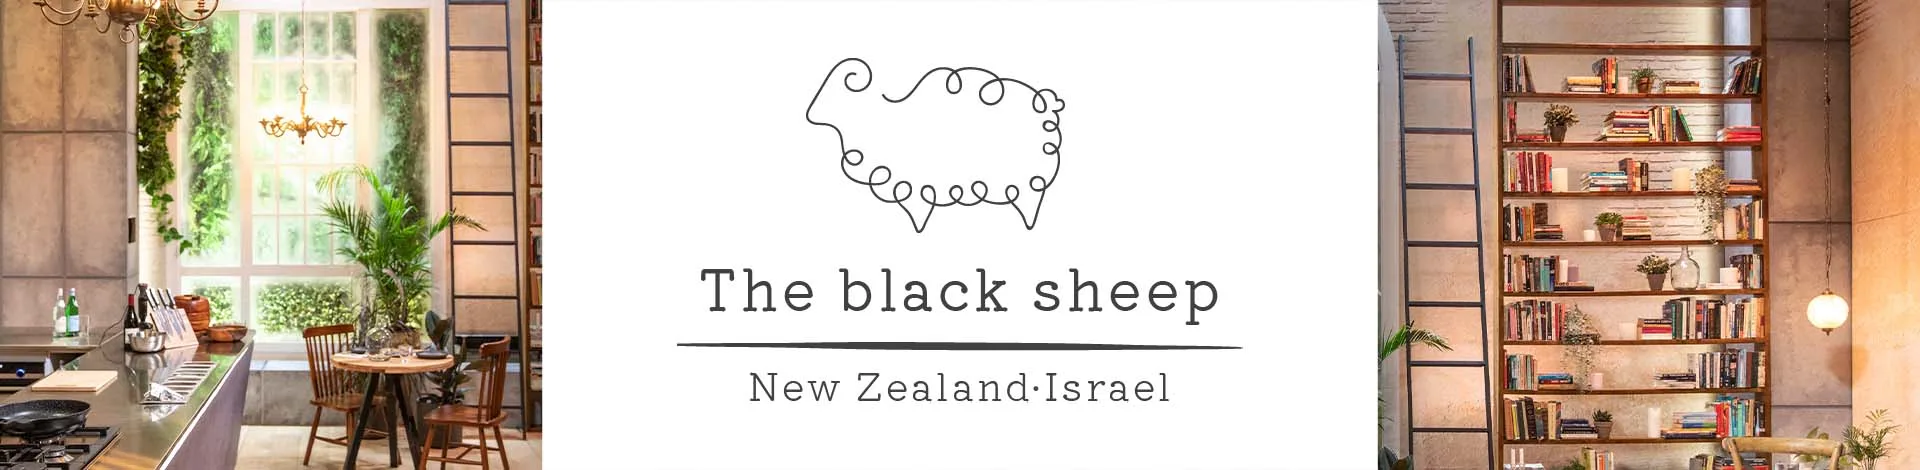 The black sheep, המסעדה הבאה